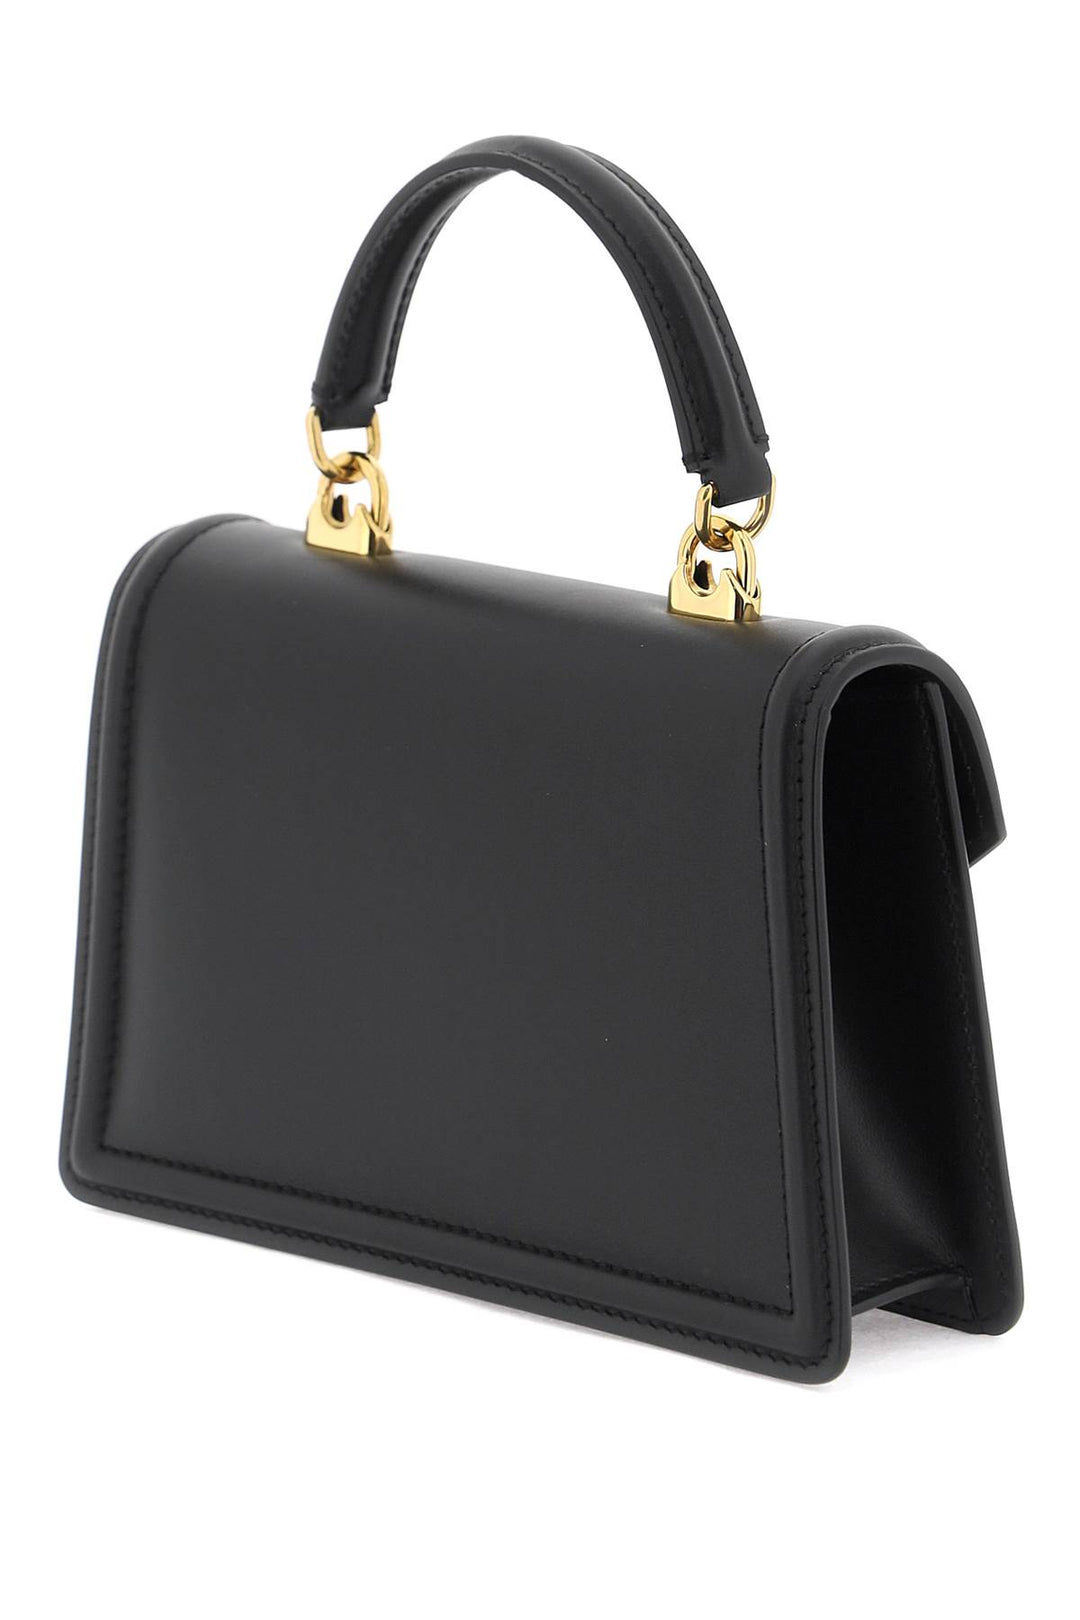 Dolce & Gabbana Small Devotion Bag   Nero